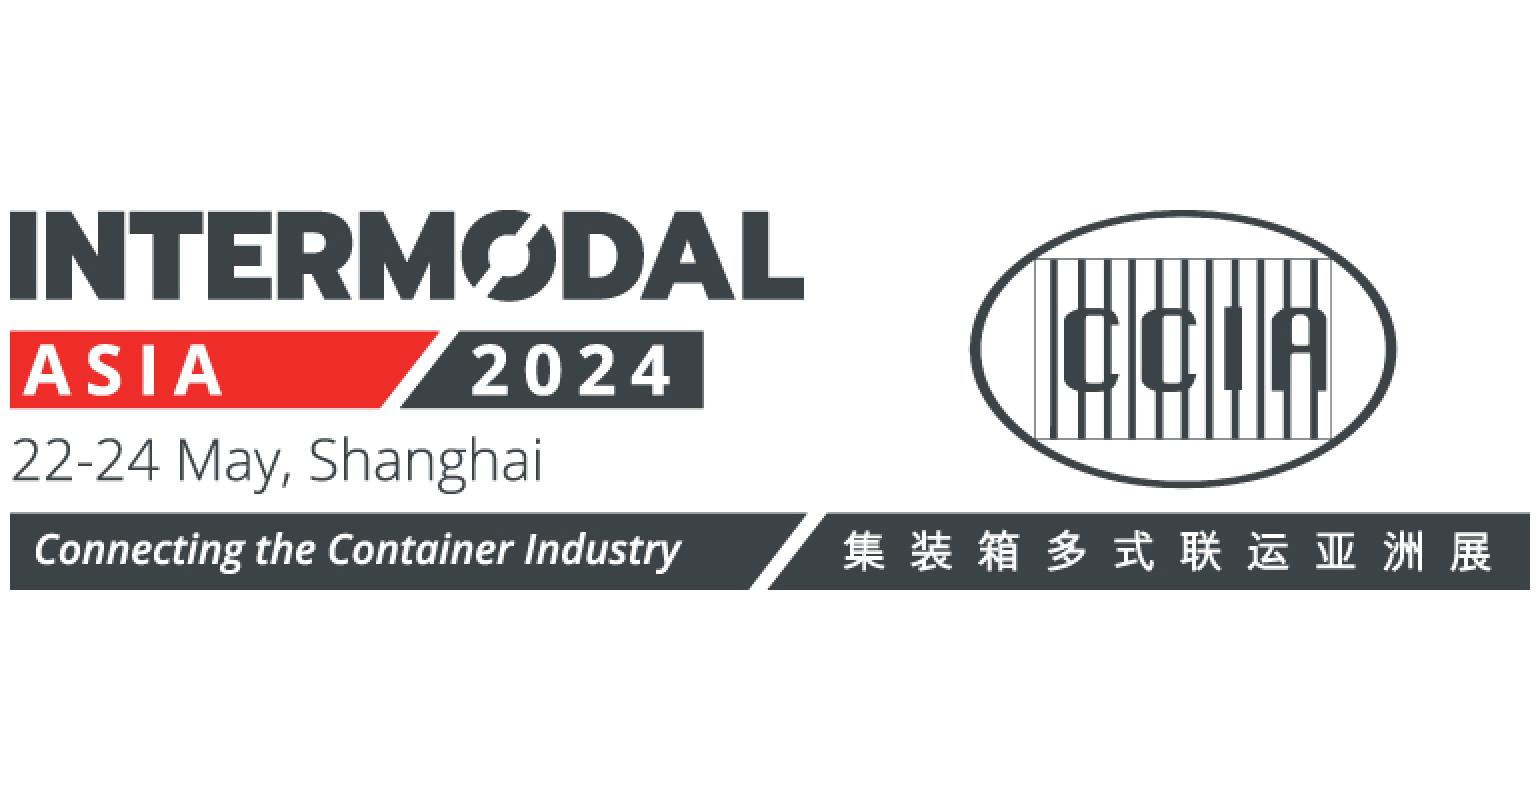 Intermodal Asia 2024 Seatrade Maritime